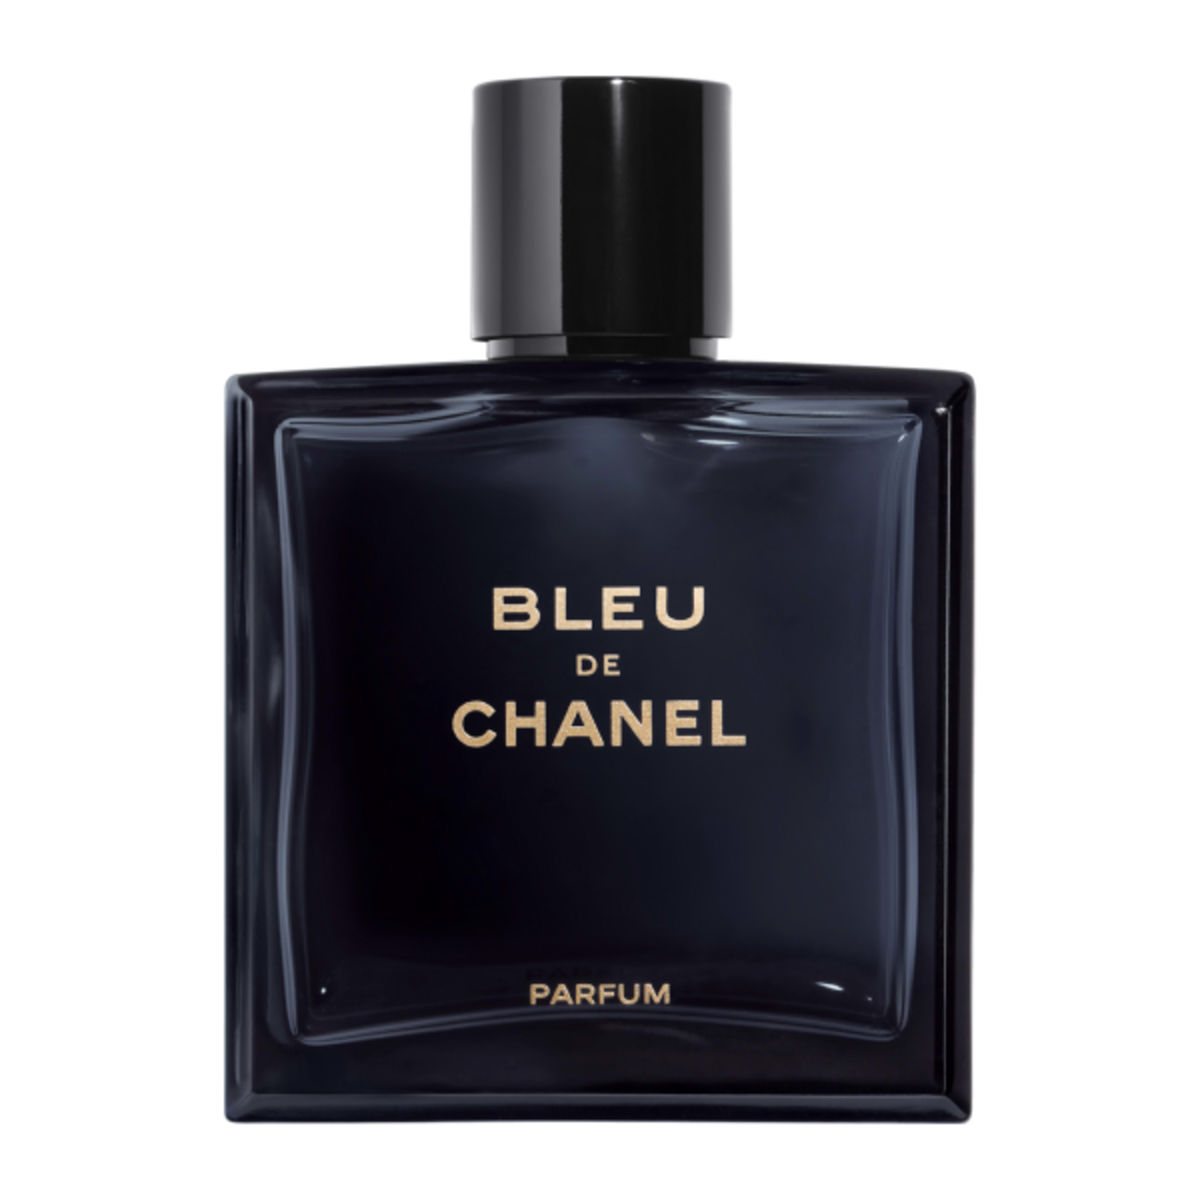 bleu-de-chanel-parfum-spray-3-4fl-oz--packshot-default-107180-8821897232414